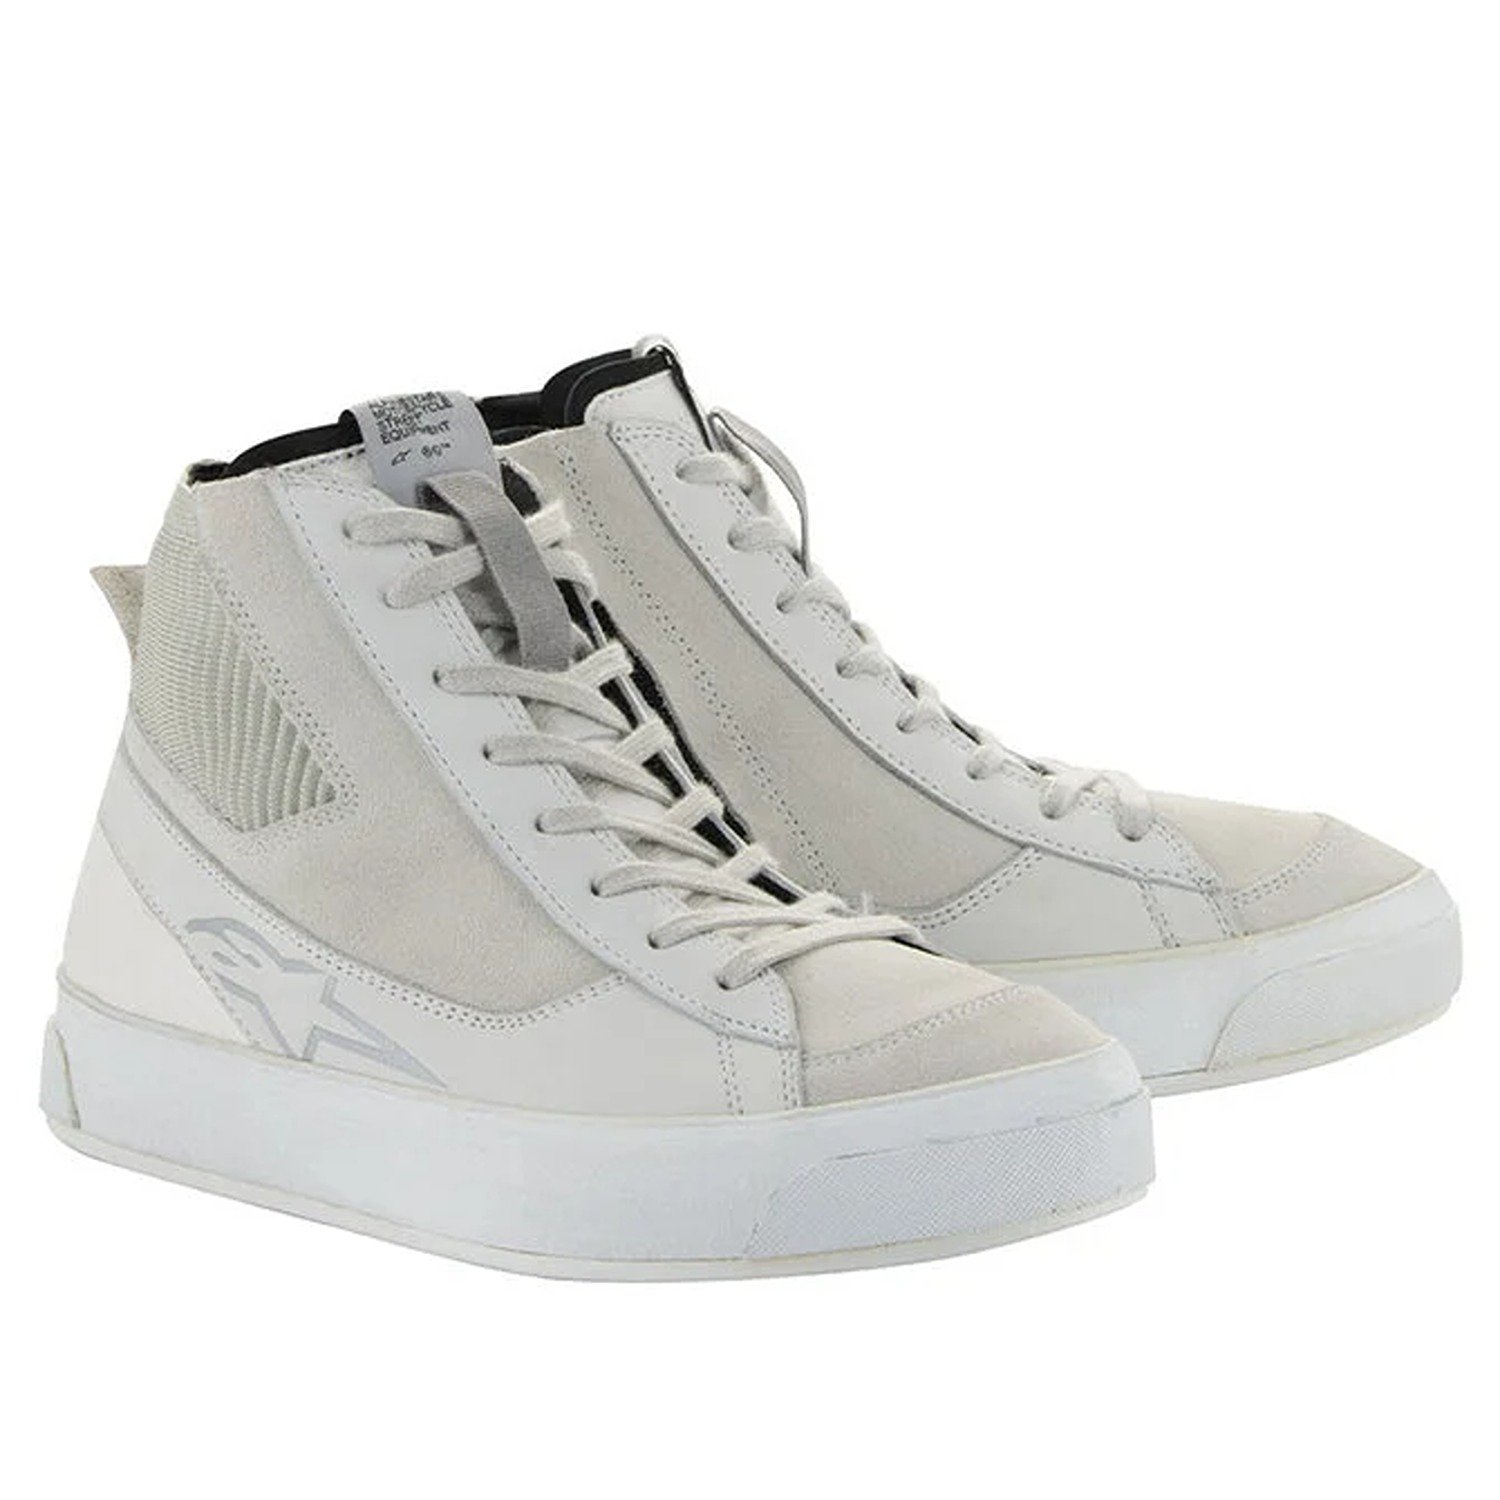 Image of Alpinestars Stella Stated Podium Shoes White Cool Gray Size US 85 ID 8059347350158